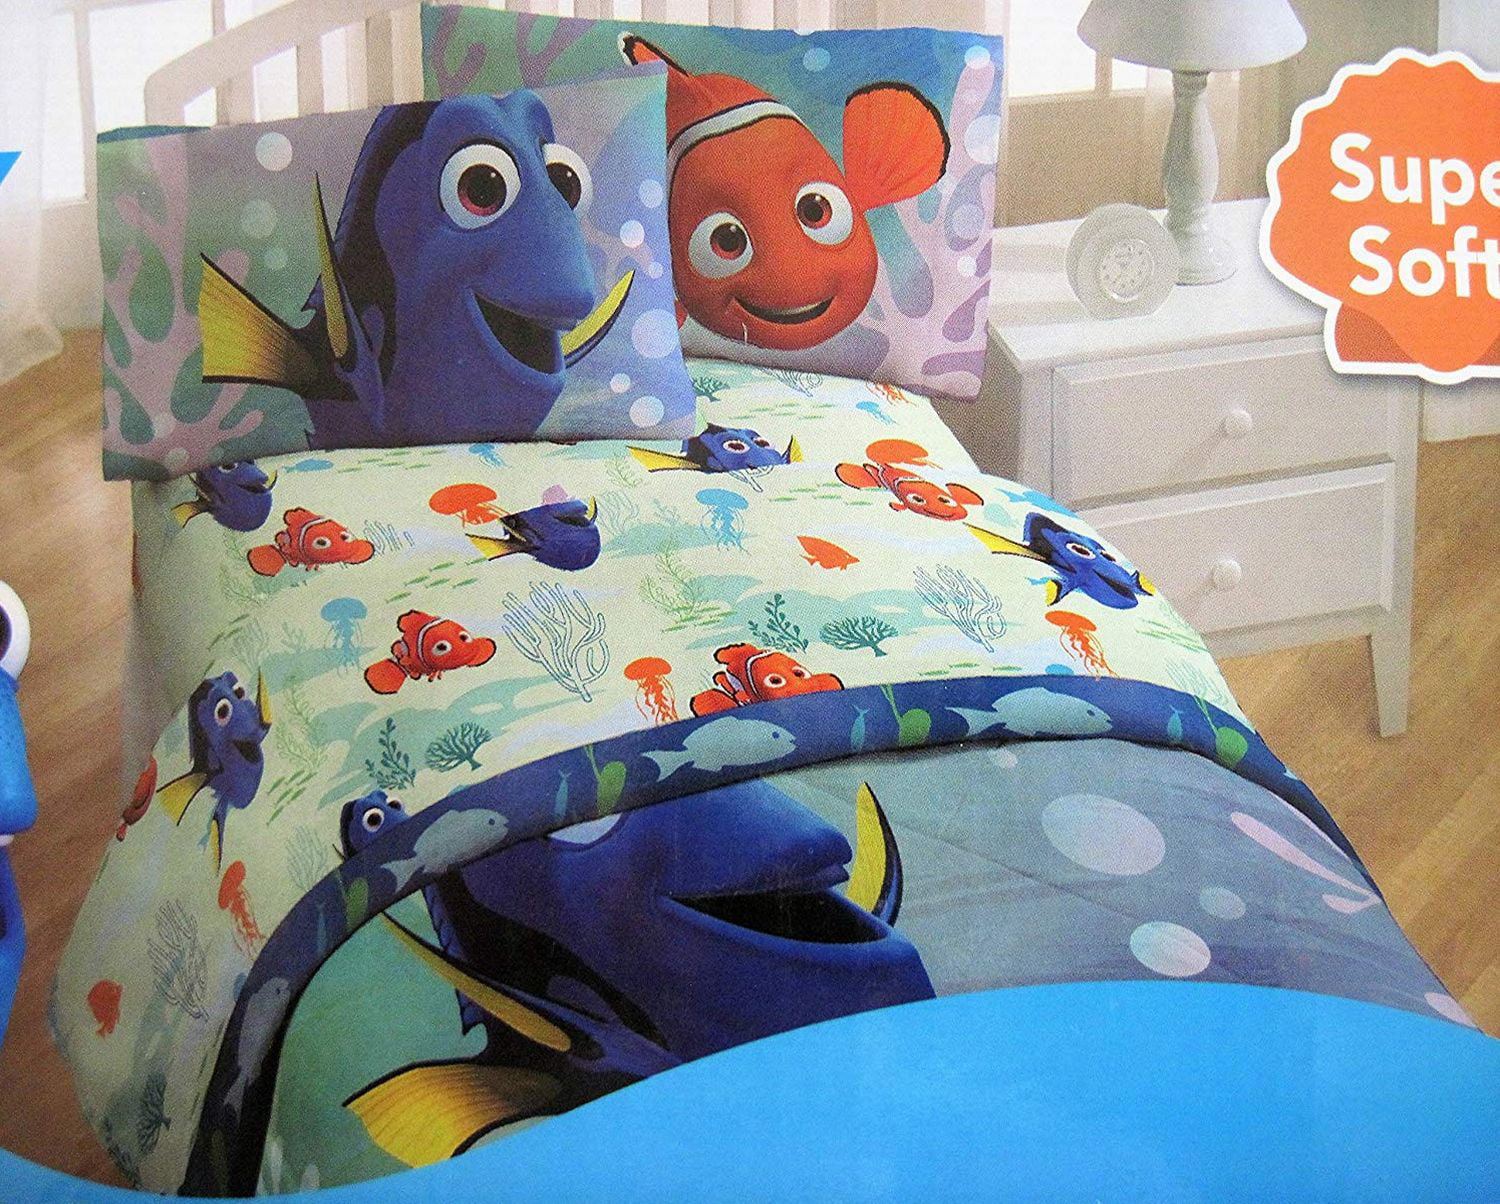 Details about   Vintage Disney Pixar Finding Nemo Twin Sheet Set Nemo used great shape 